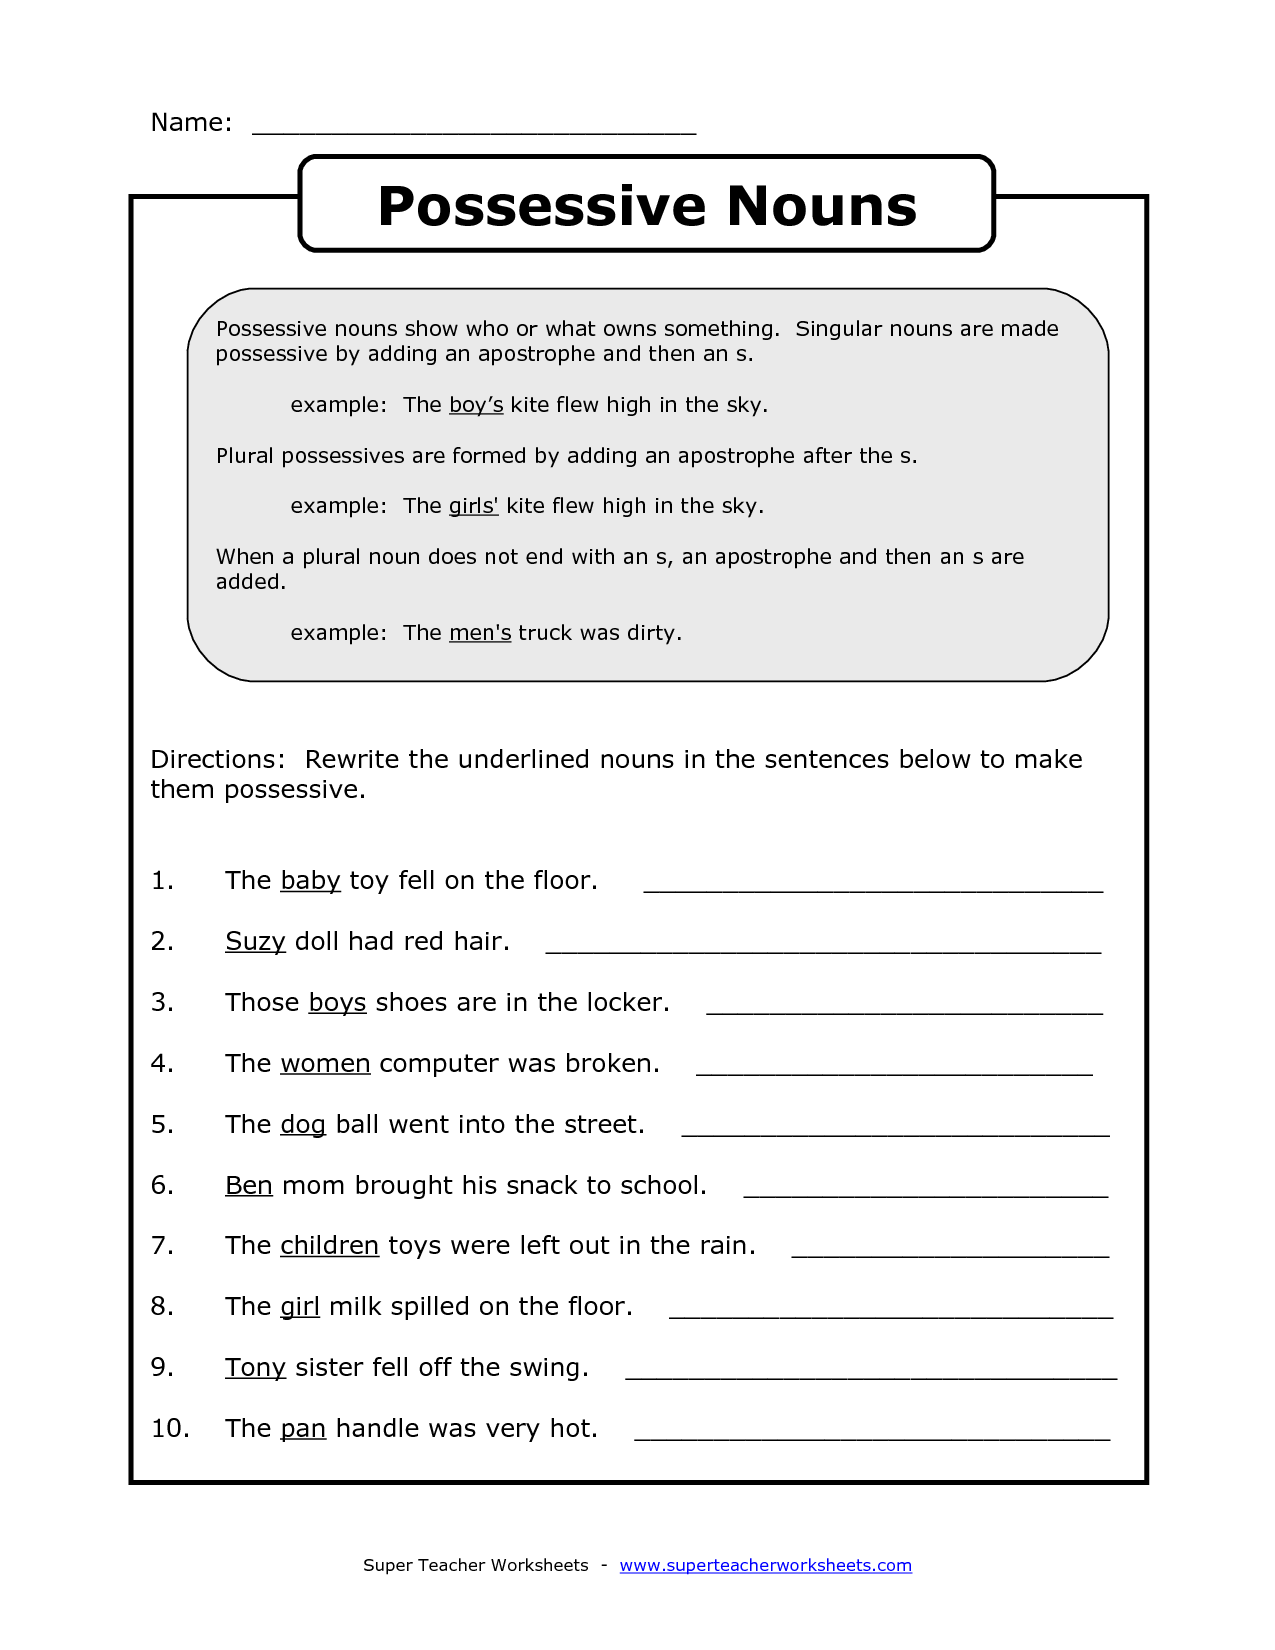 possessive-noun-worksheets-worksheets-day